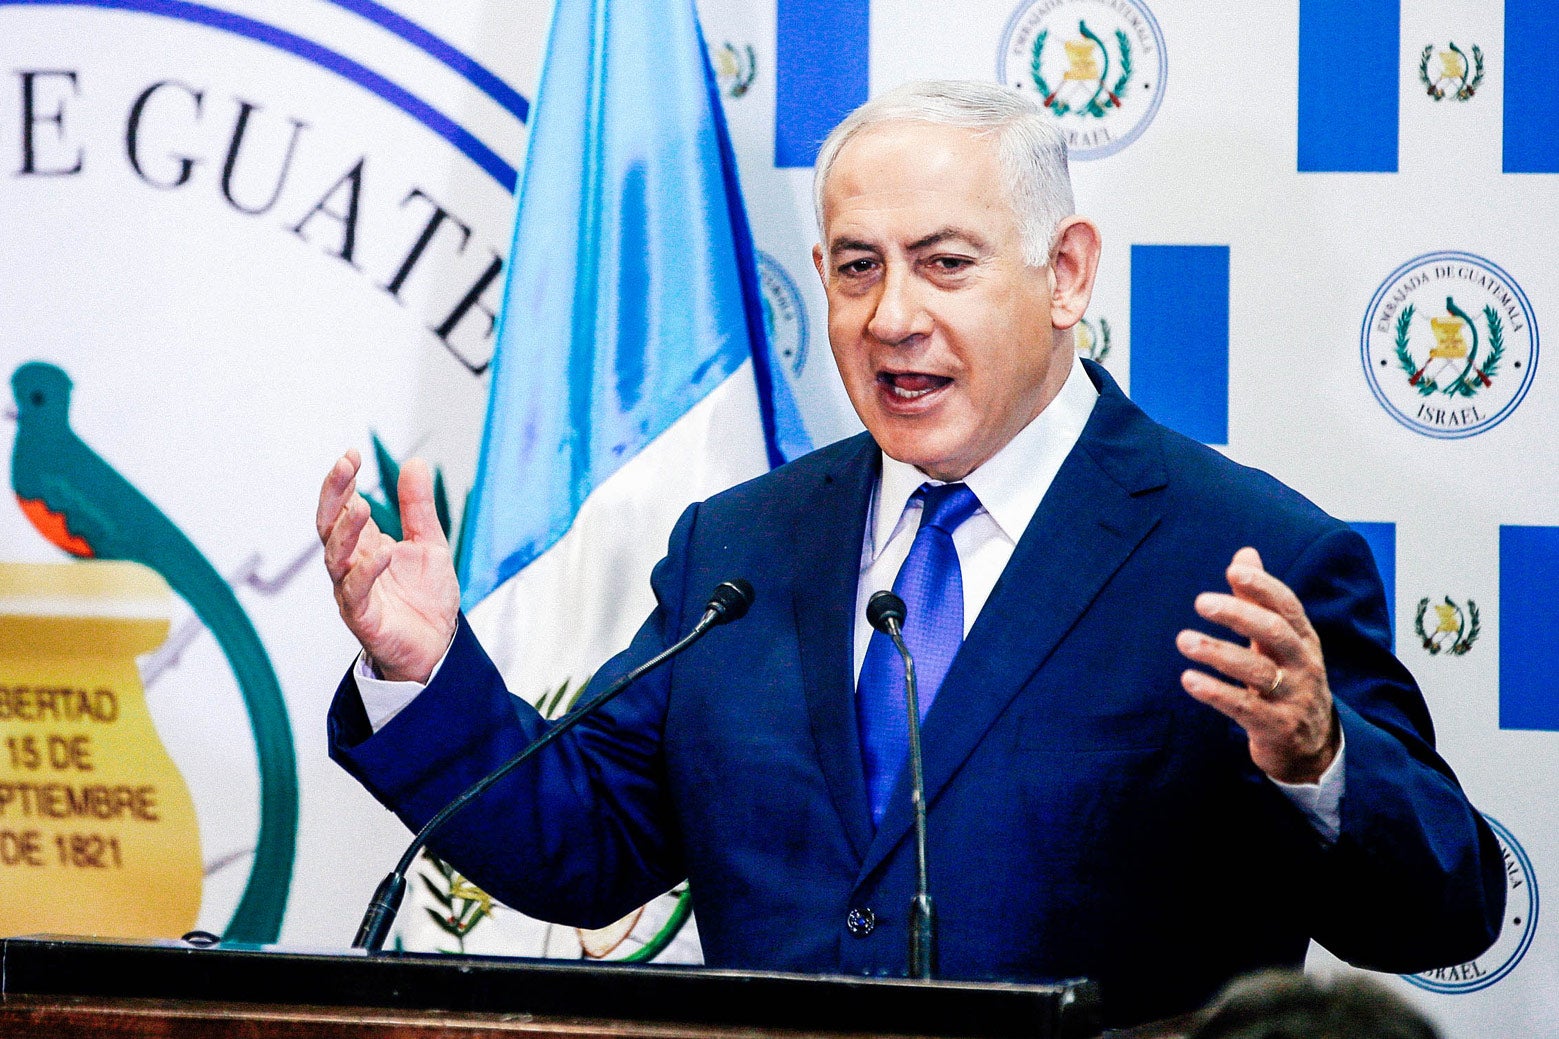 Why Bibi Netanyahu embraces anti-Semites and ignores the Palestinians.